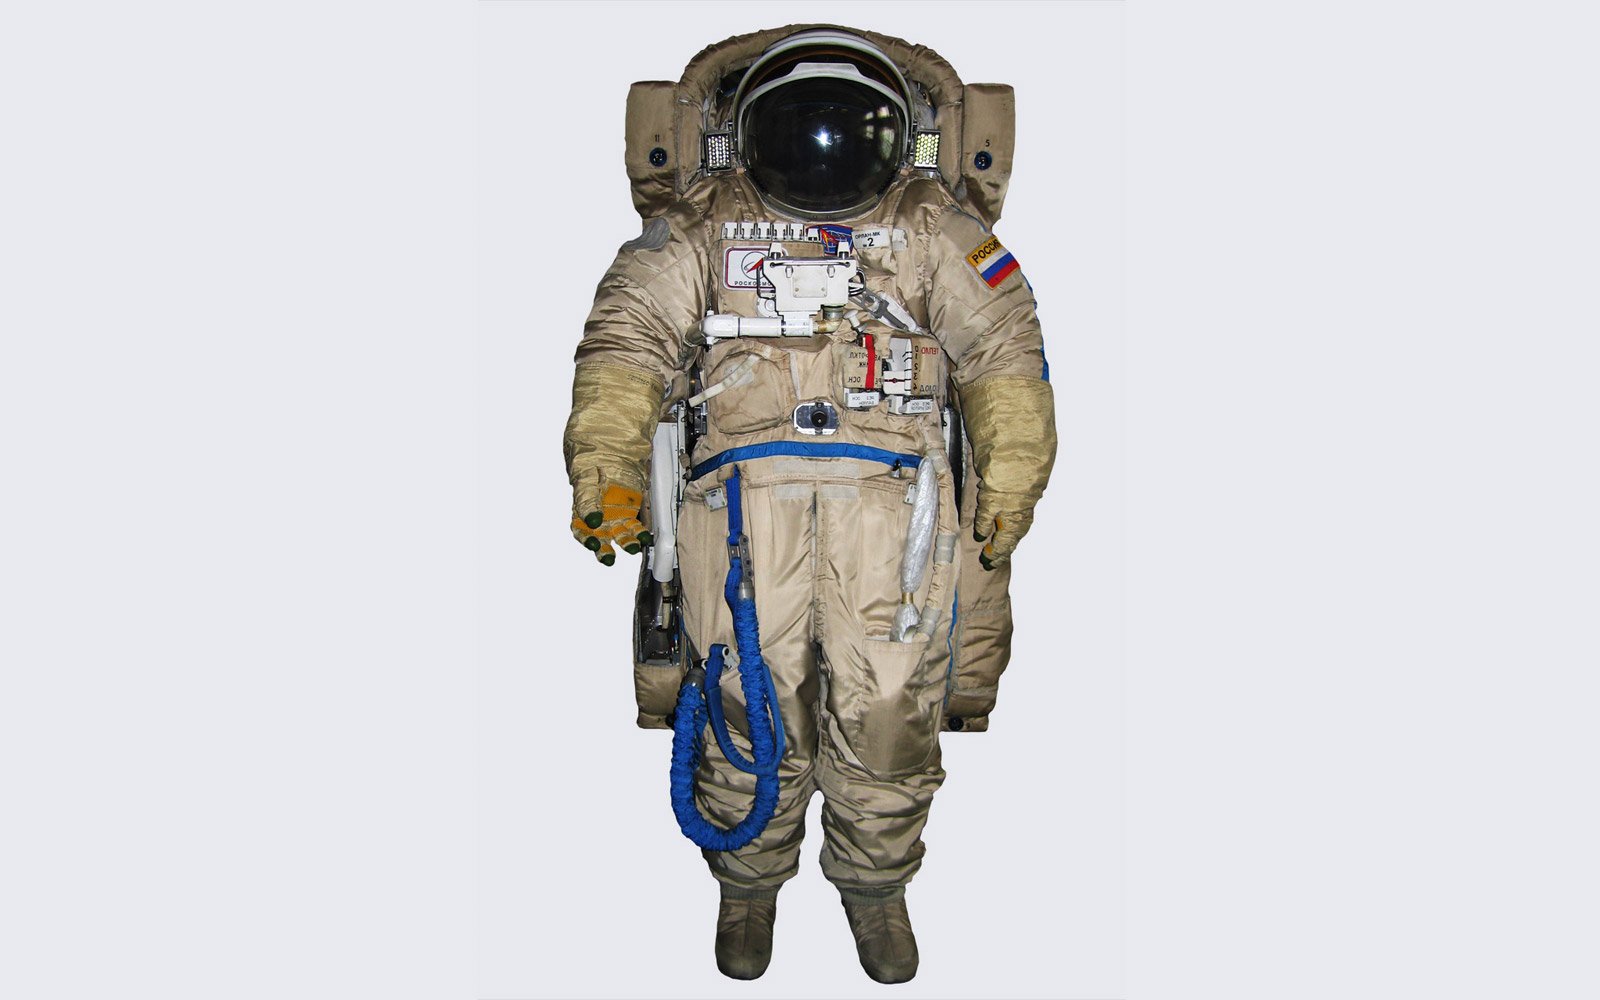 Скафандр дам. Скафандр Космонавта Орлан. Орлан костюм Космонавта. Скафандр Орлан м. Костюм для скафандр Орлан МКС.